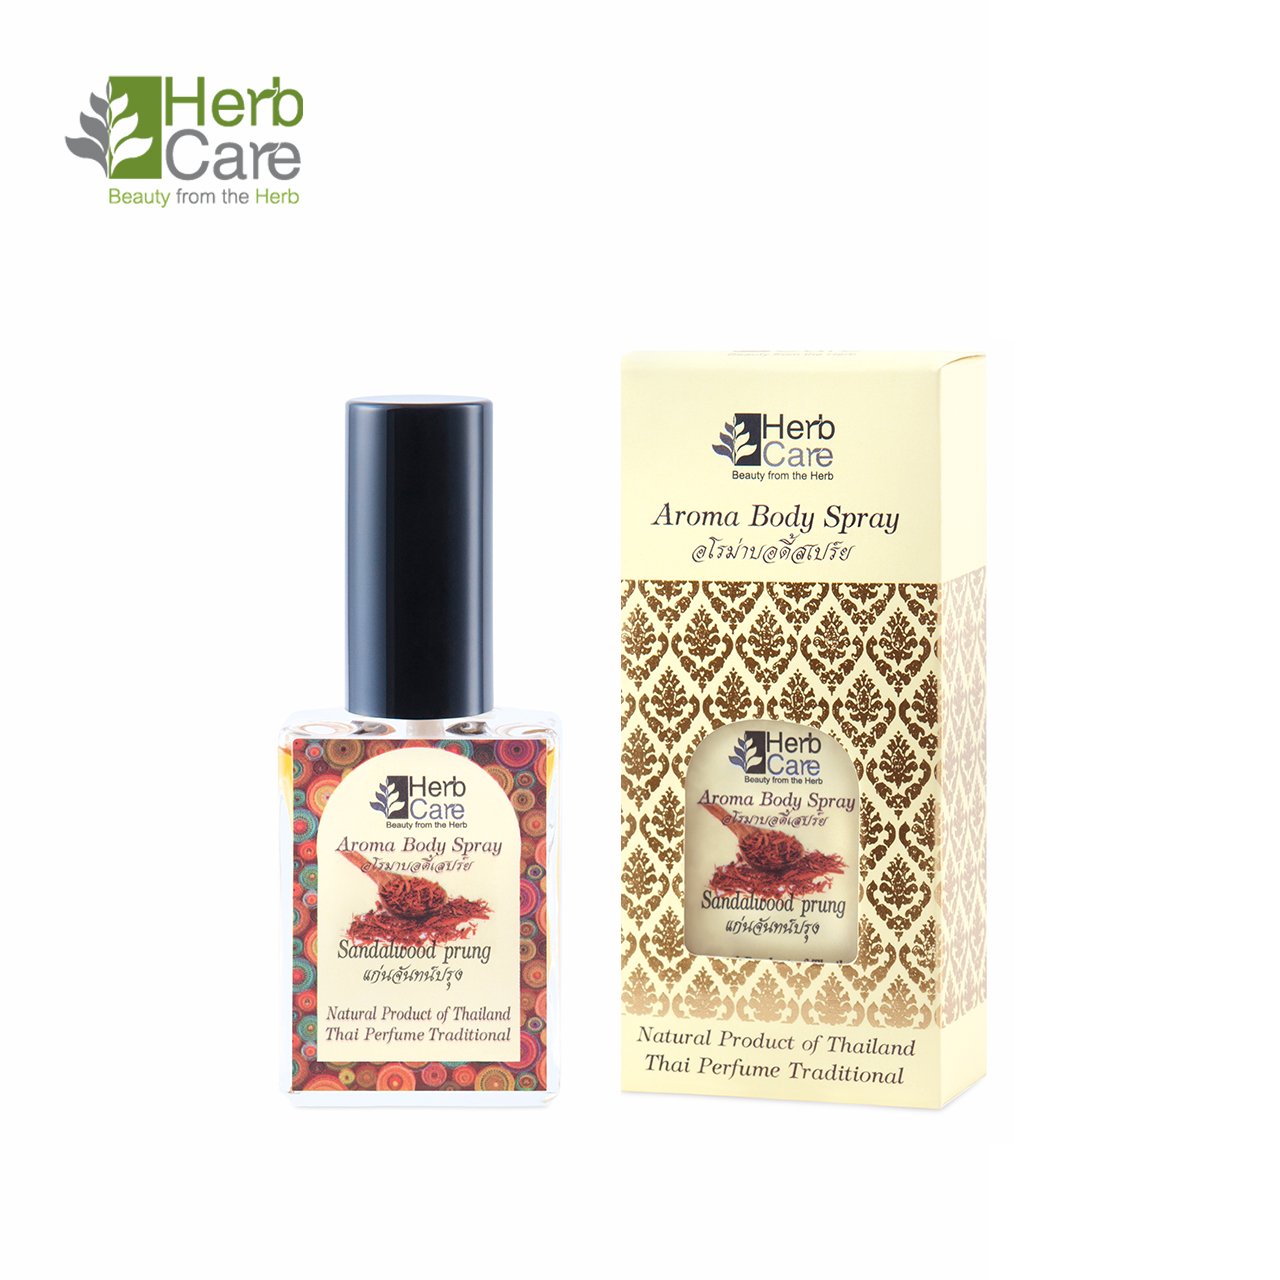 Sandal Wood Prung : Aroma Body Perfume